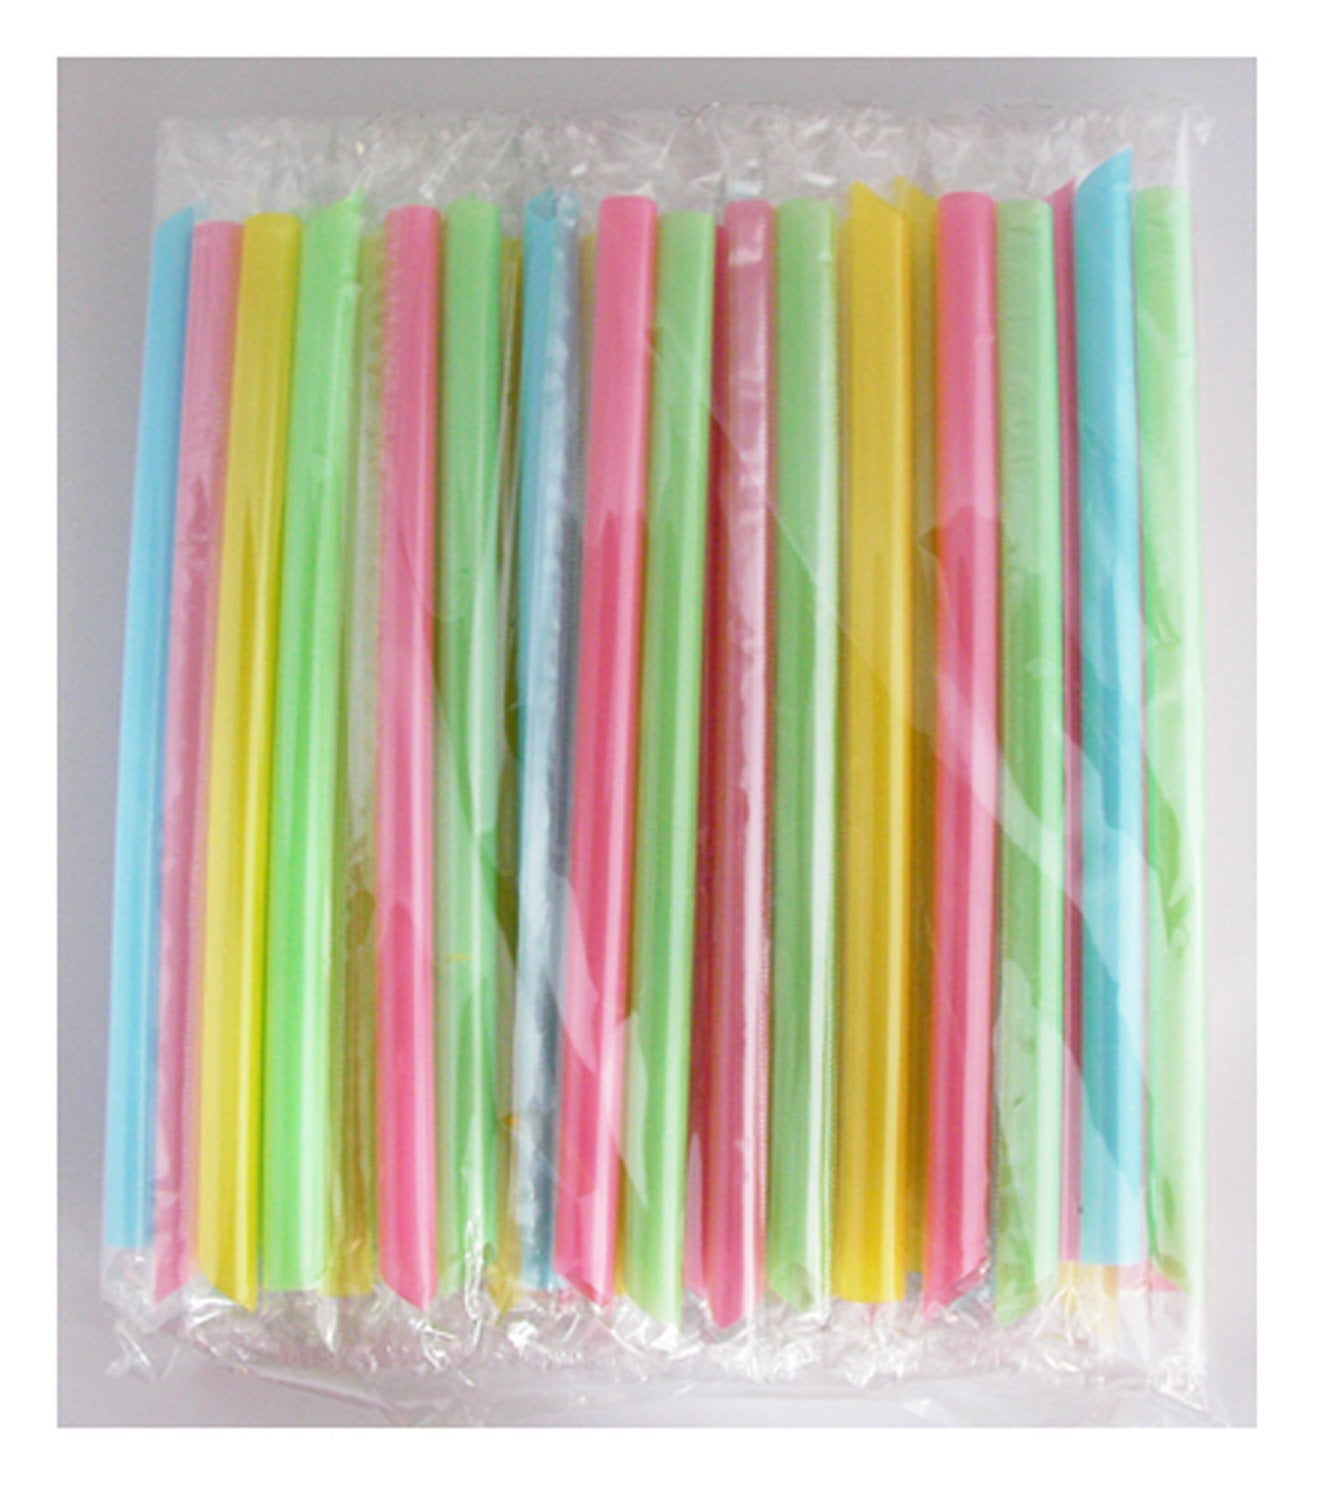 Individually Wrapped Clear 100 Extra Large Flexible Milkshake Straws 